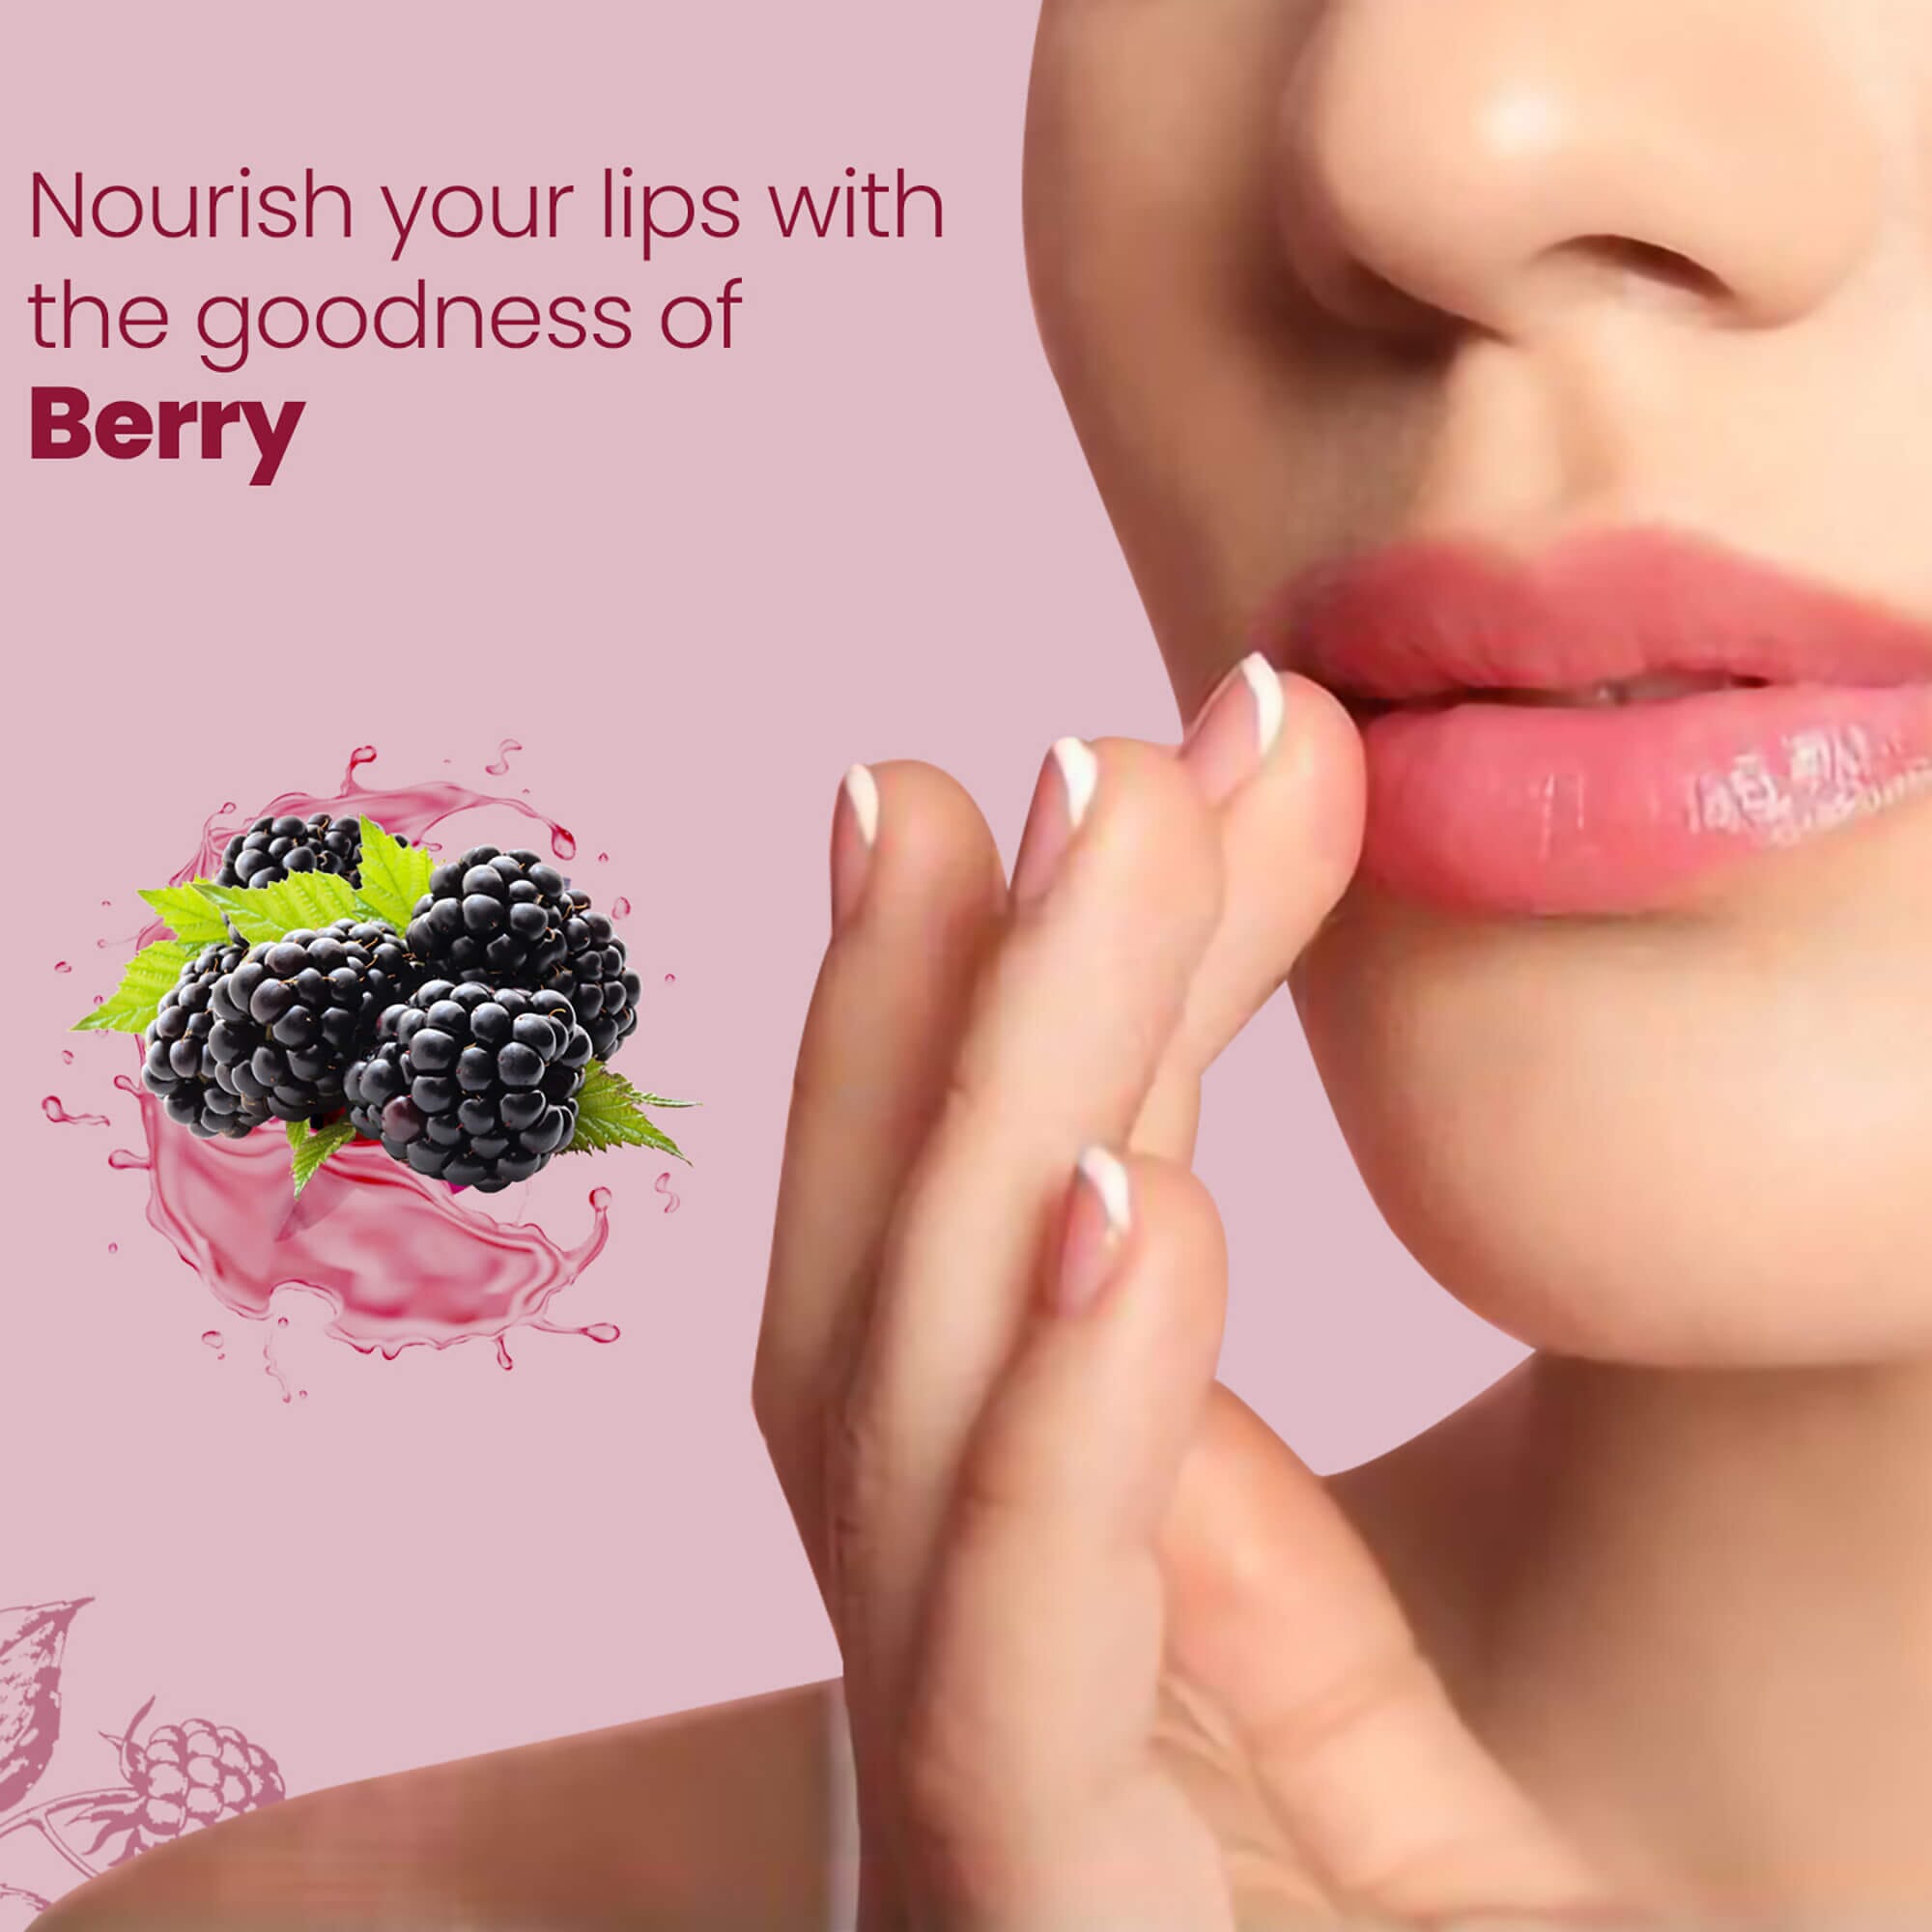  Himalaya Berry Shine Lip Care - Goodness of Berry